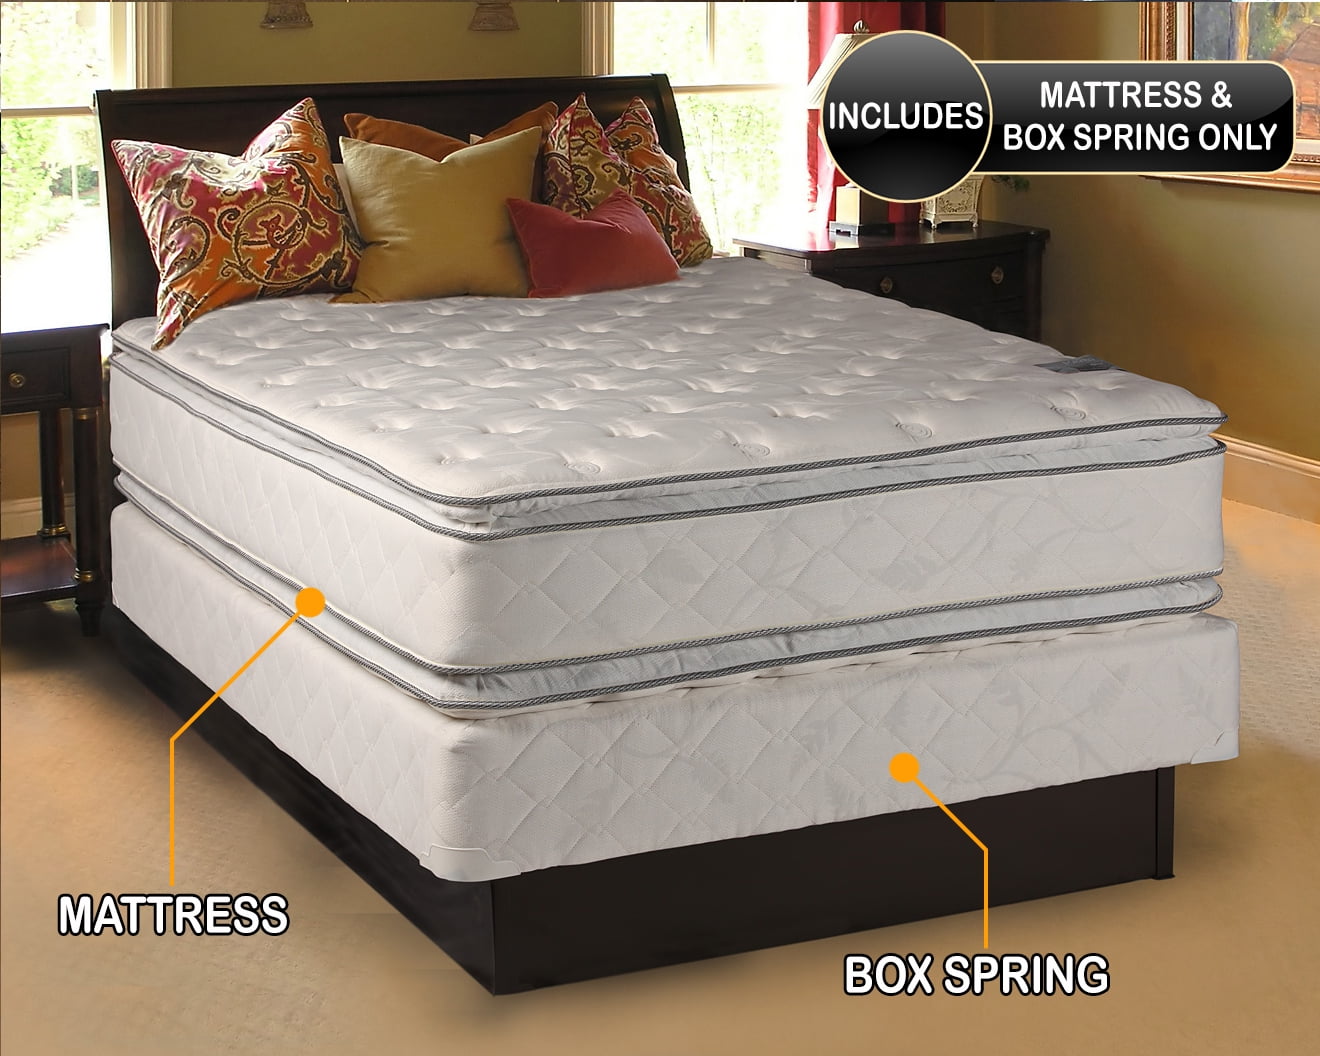 sleep clinic i-support queen size mattress review